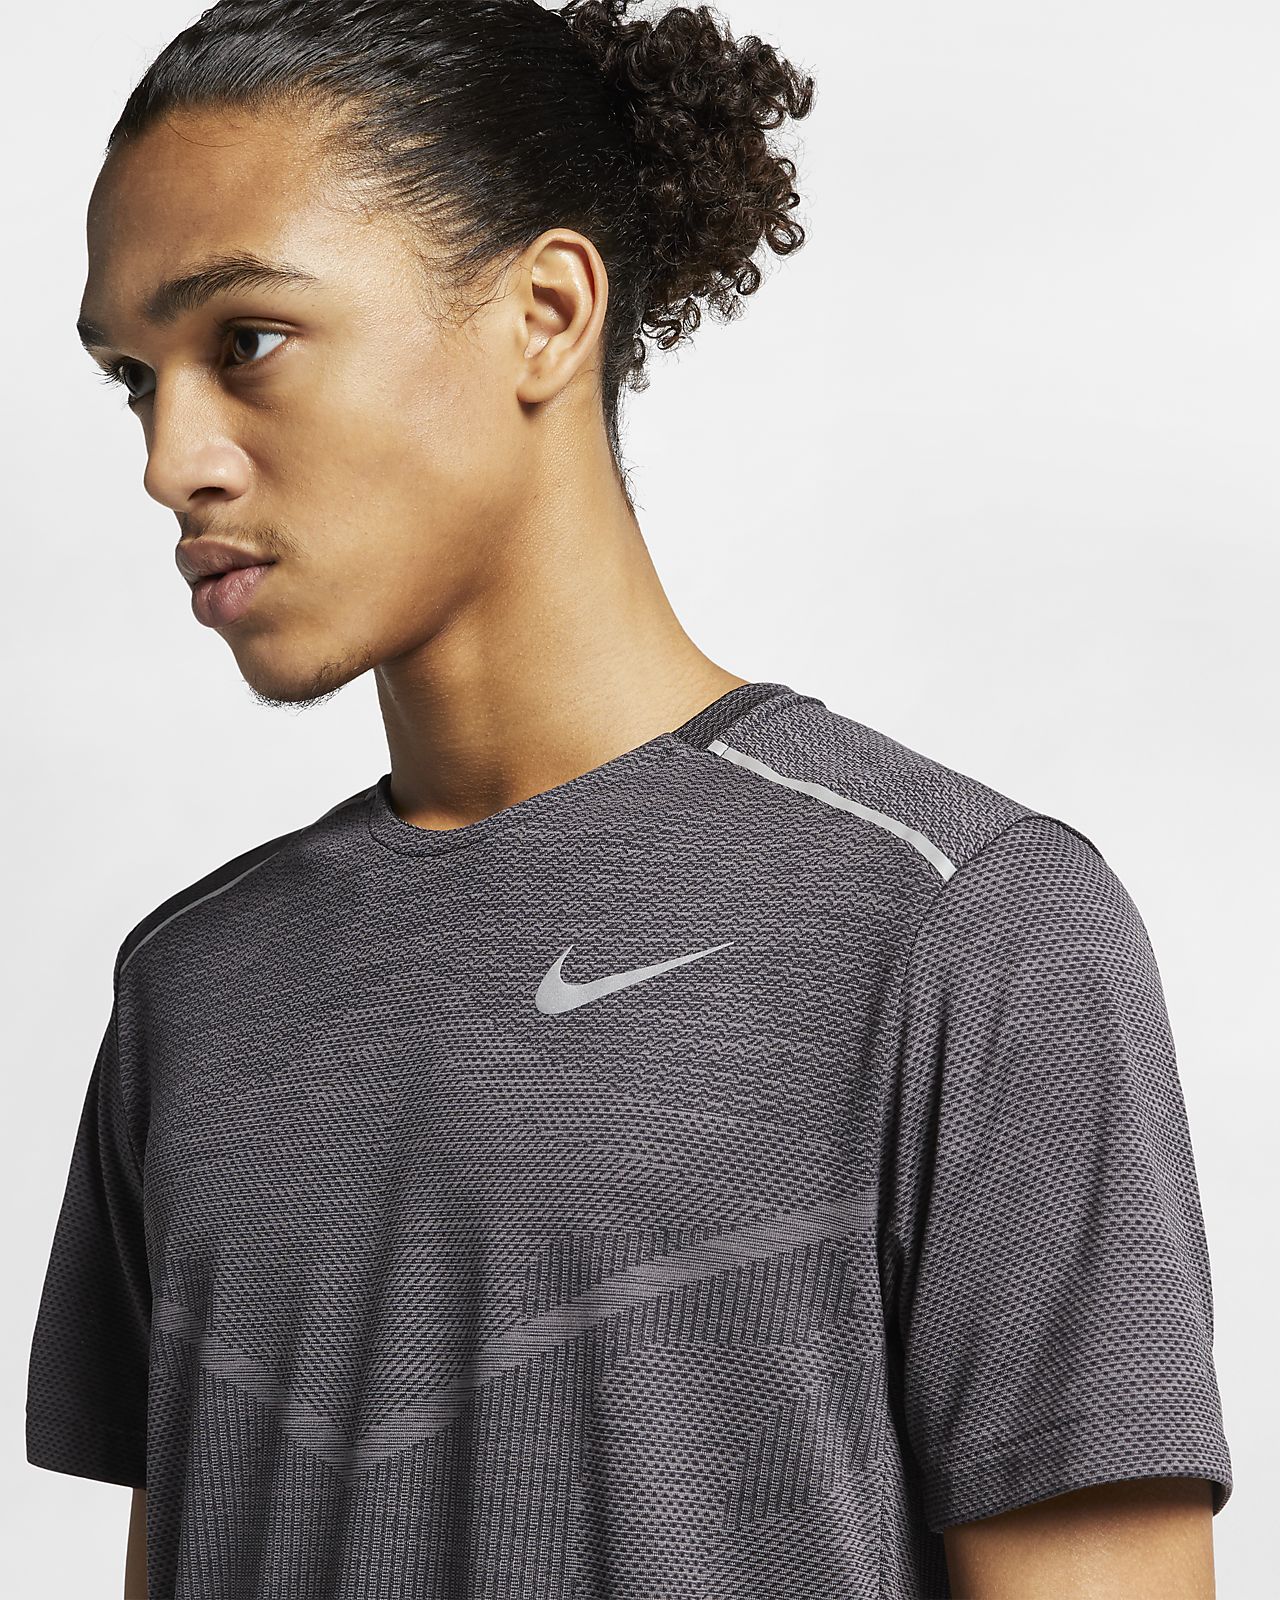 Men's Nike TechKnit Short Sleeve 